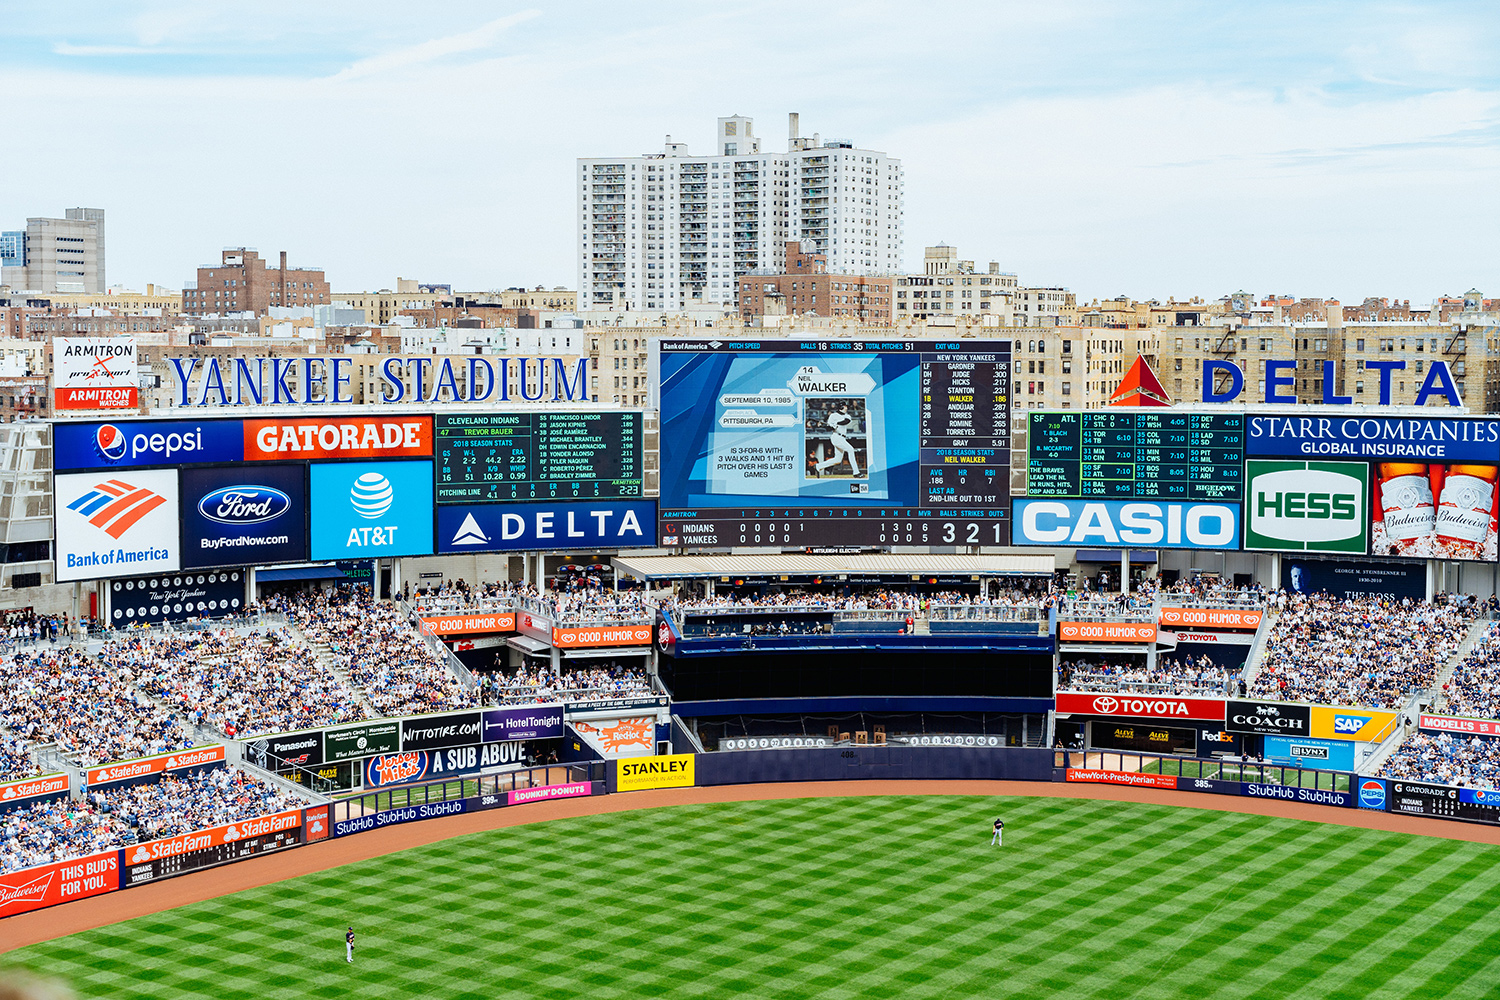 Baseball Game at Yankees Stadium in New York